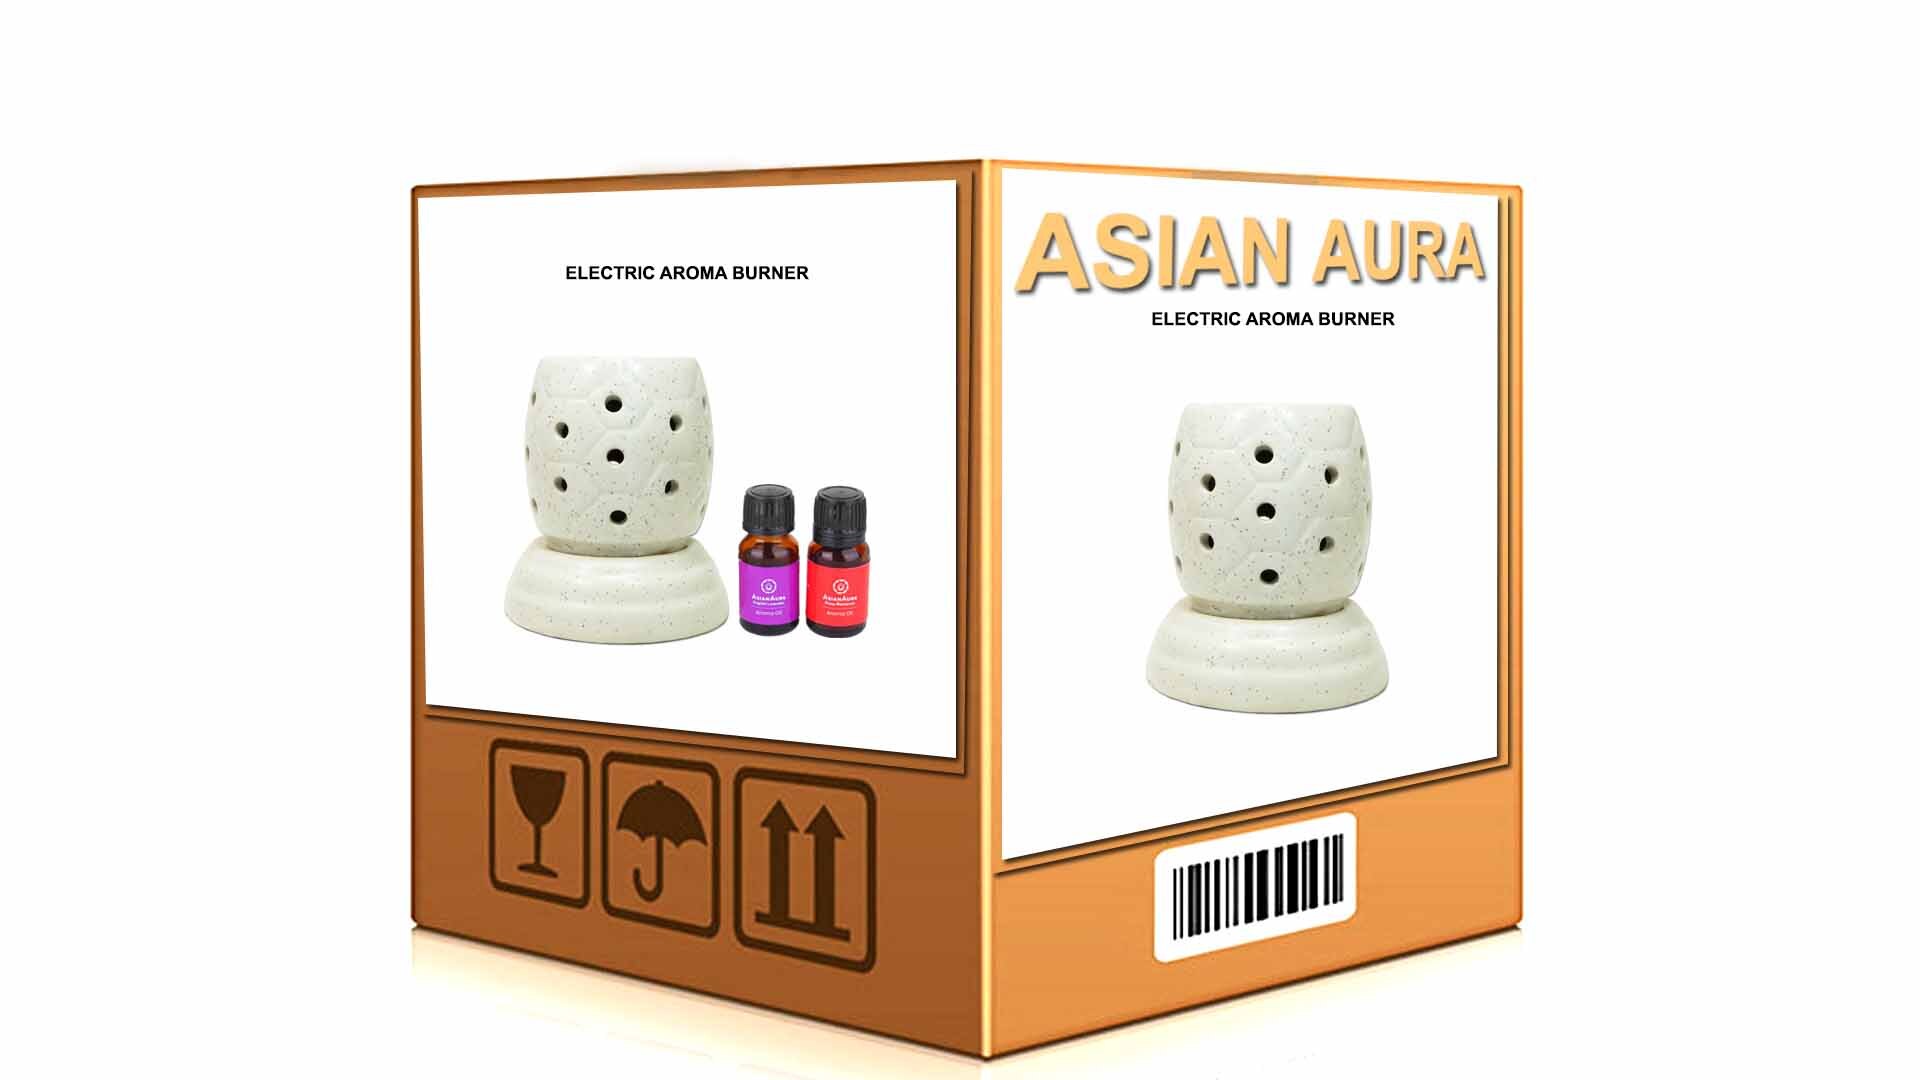 Asian Aura Ceramic Aromatic Oil Diffuser with 2 oil bottles AAEB 0011-W